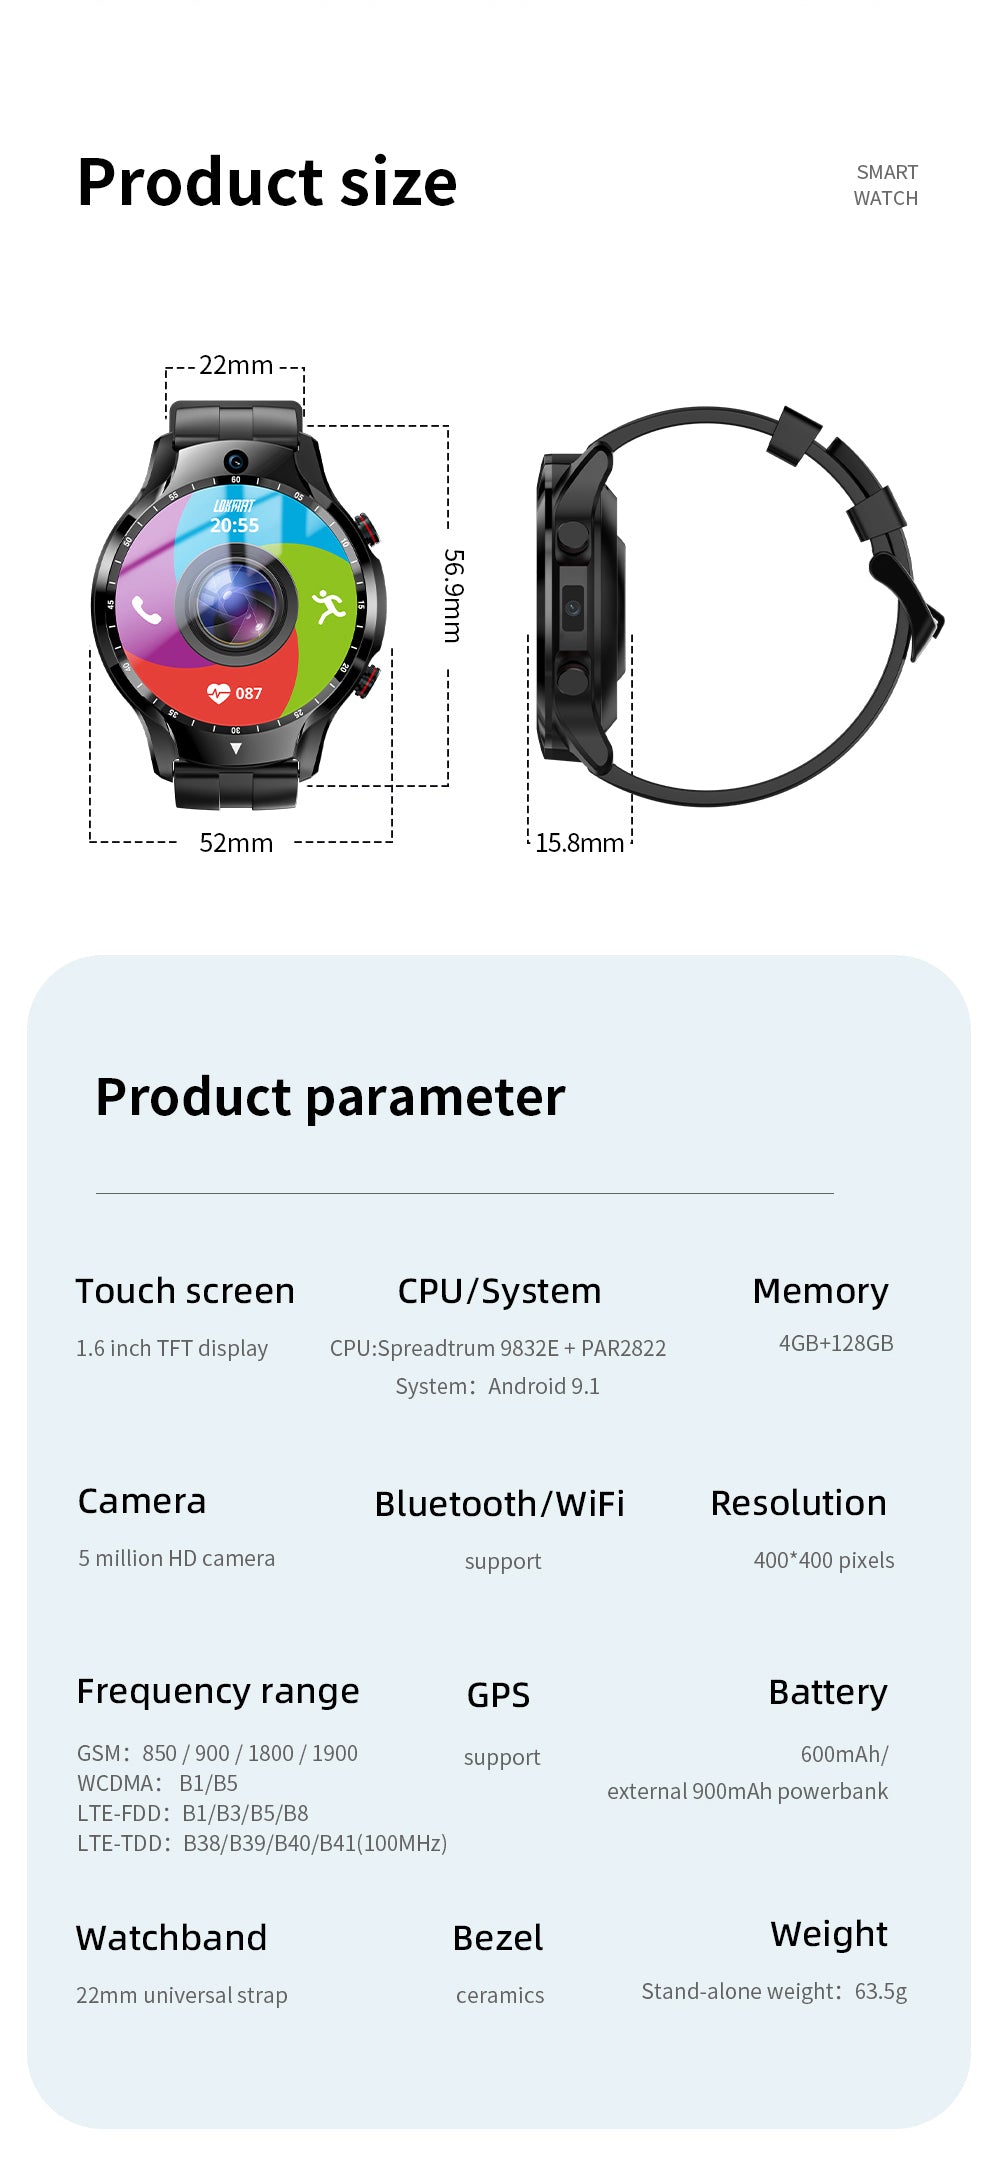 TechWatch 4G LTE Smart Watch 4GB RAM 128GB ROM